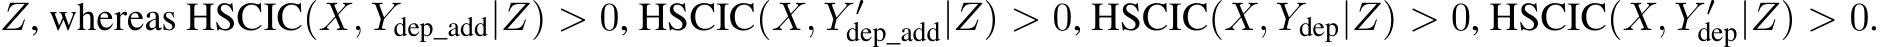 Z, whereas HSCIC(X, Ydep_add|Z) > 0, HSCIC(X, Y ′dep_add|Z) > 0, HSCIC(X, Ydep|Z) > 0, HSCIC(X, Y ′dep|Z) > 0.